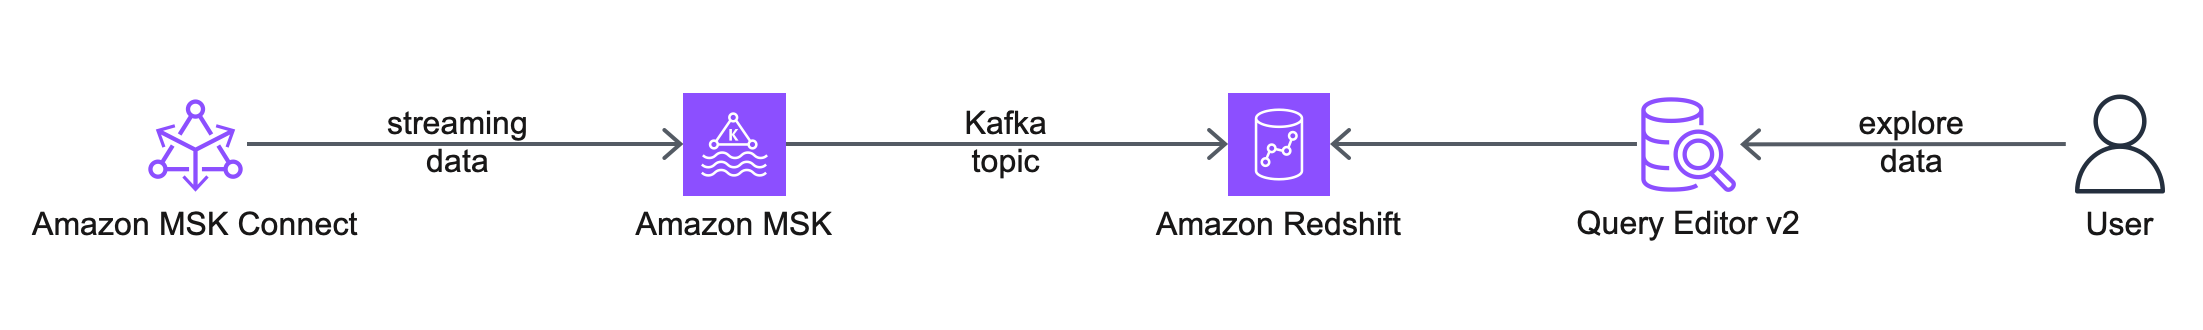 Simplify data streaming ingestion for analytics using Amazon MSK and Amazon Redshift | Amazon Web Services